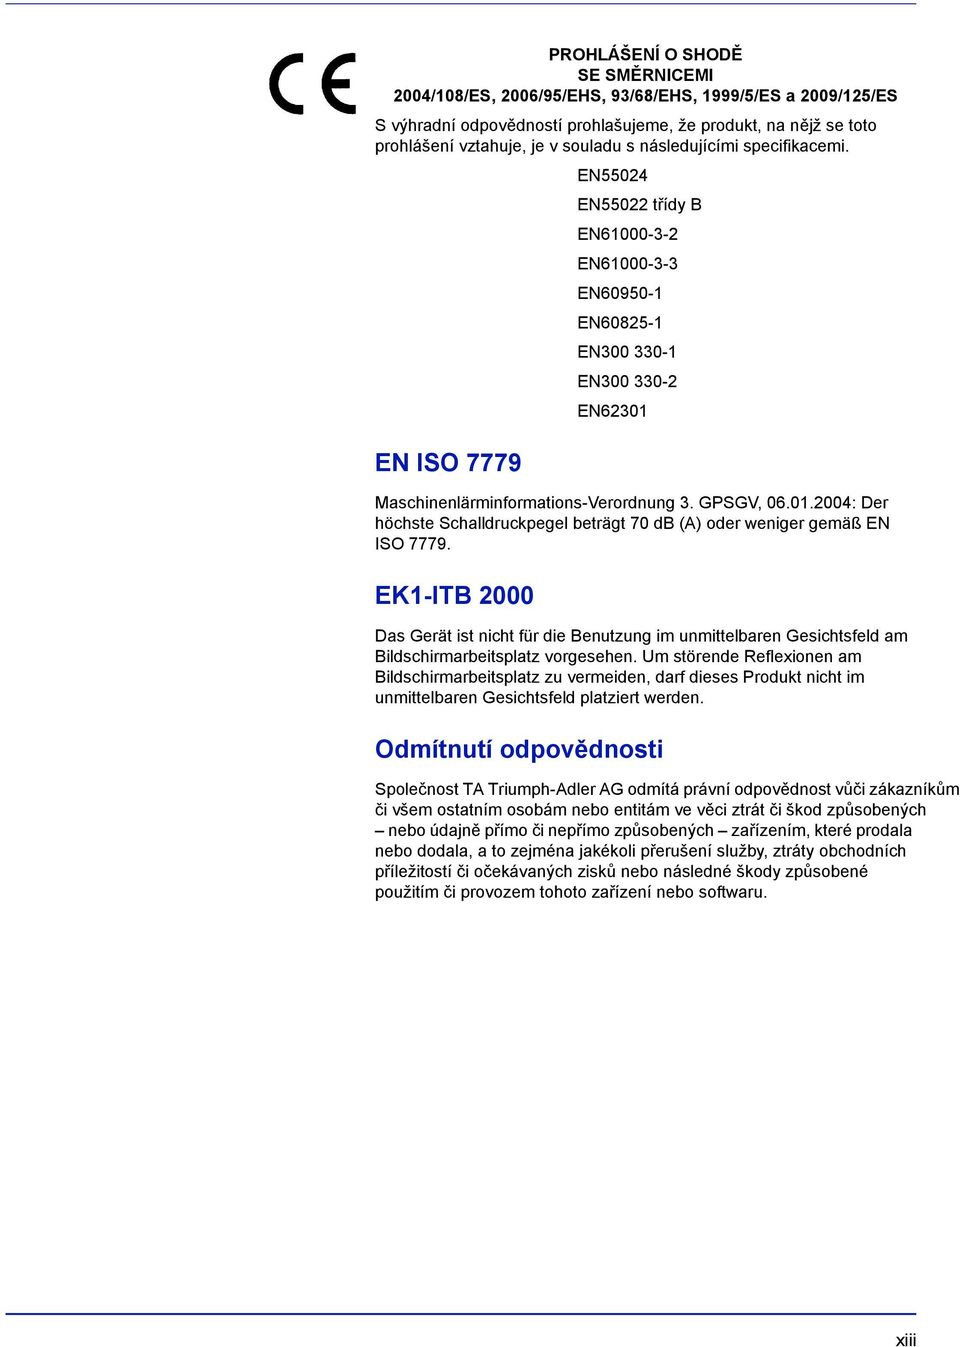 Maschinenlärminformations-Verordnung 3. GPSGV, 06.01.2004: Der höchste Schalldruckpegel beträgt 70 db (A) oder weniger gemäß EN ISO 7779.